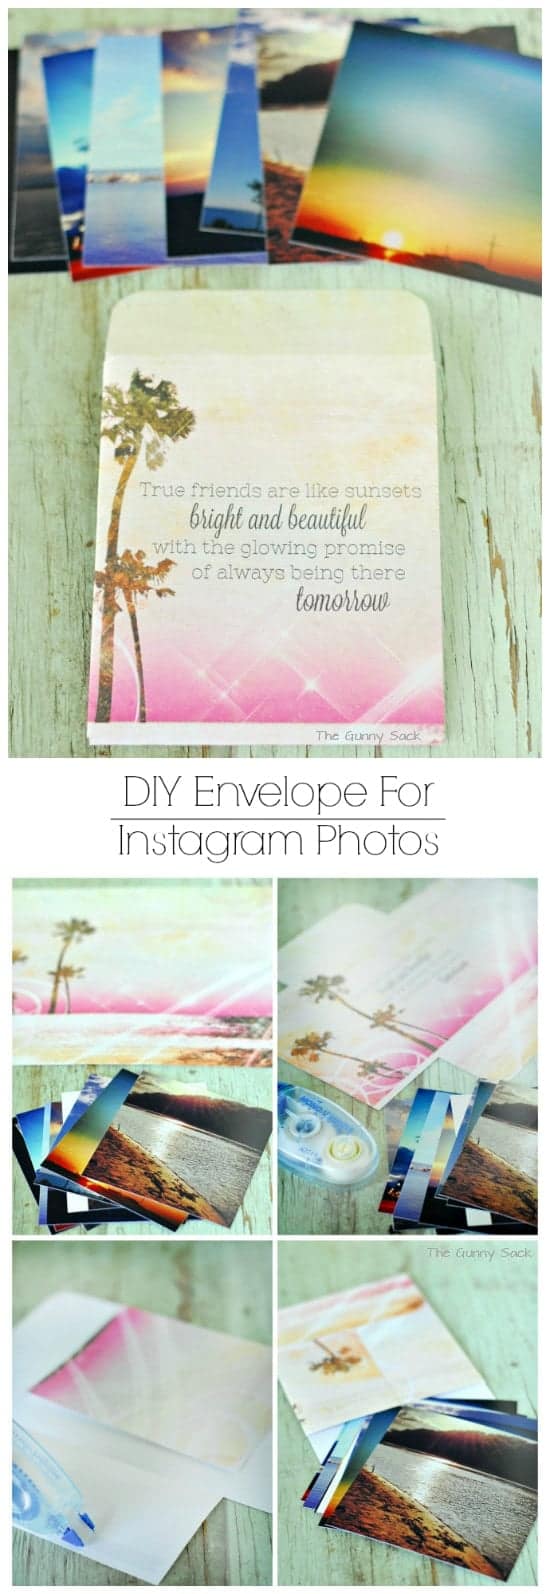 DIY Envelope For Instagram Photos